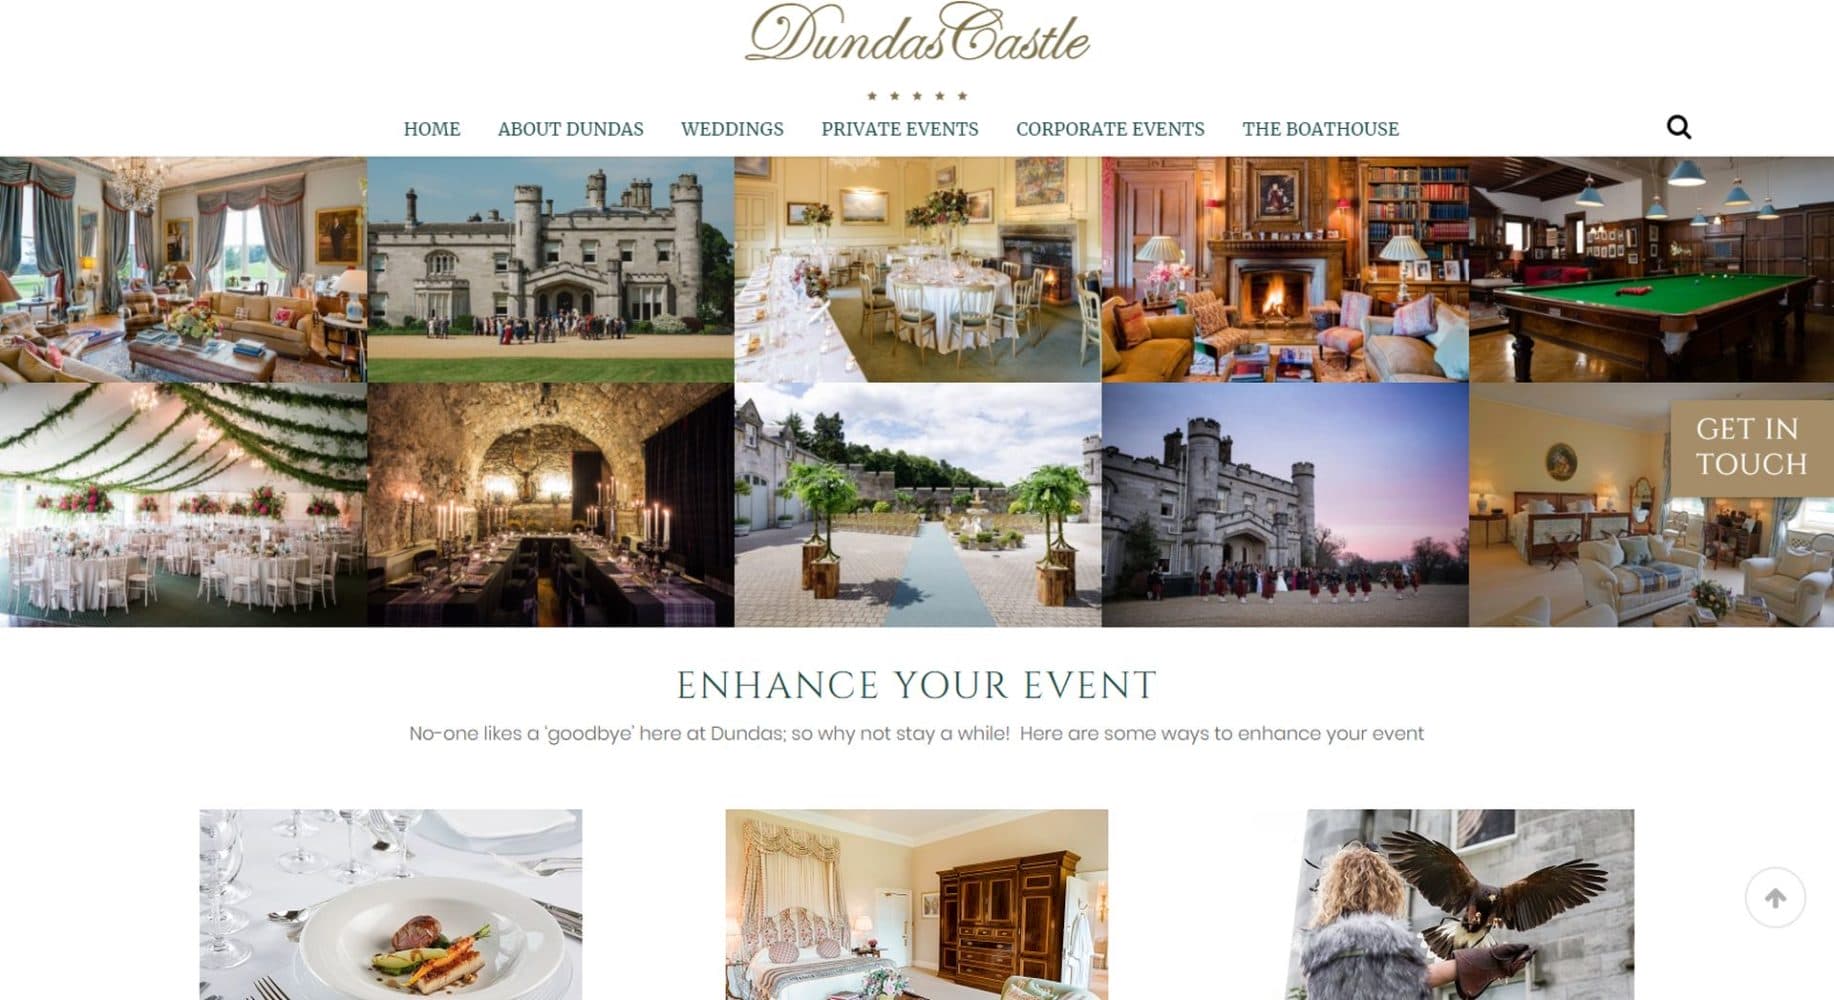 Dundas Castle Website Design Events